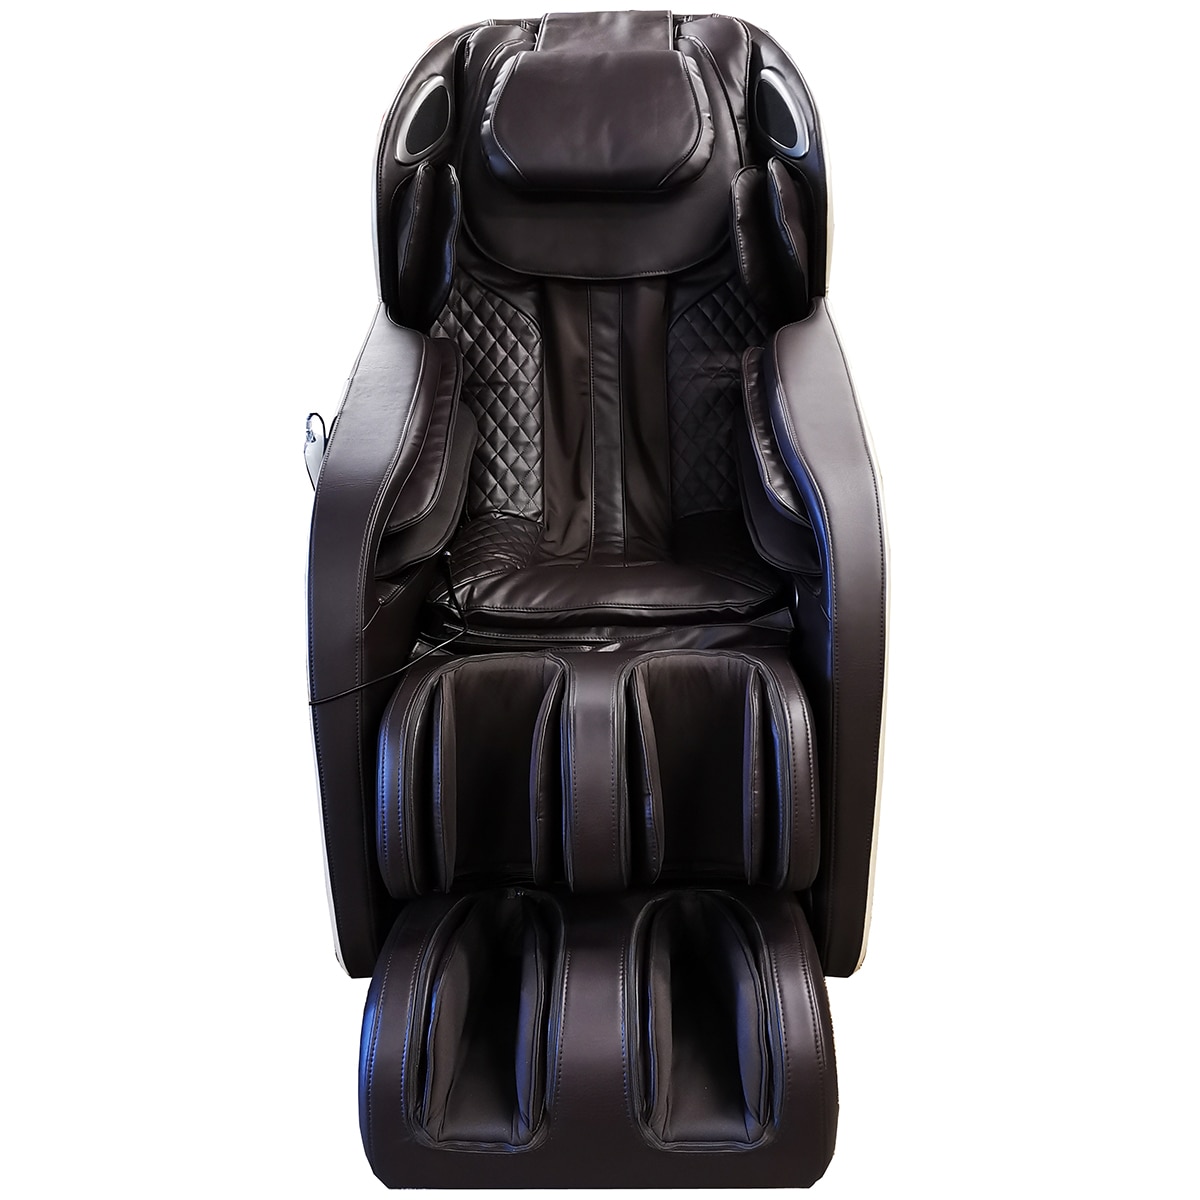 Iyume 6602 Massage Chair - Brown